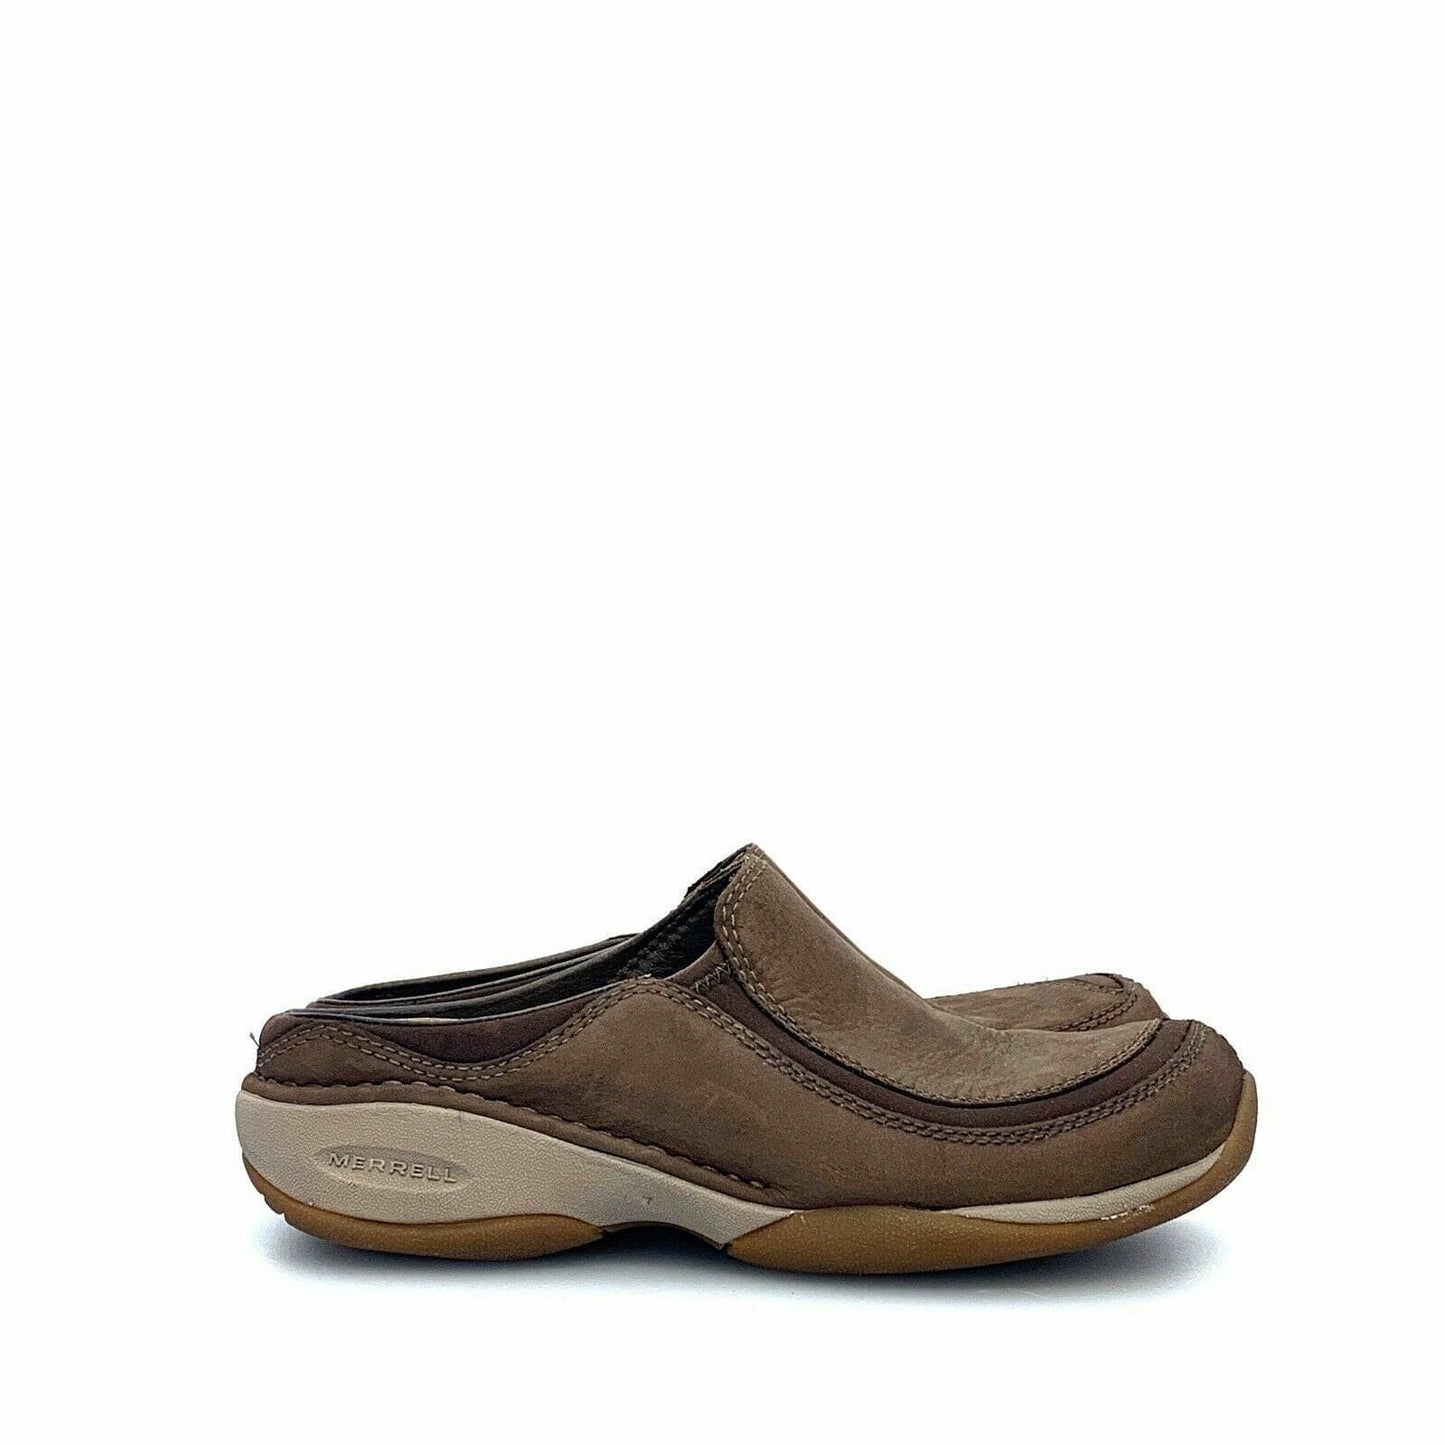 Merrell Womens Shoes SIZE 6 “Primo Scoop” Brown Leather Slip On Walking - parsimonyshoppes